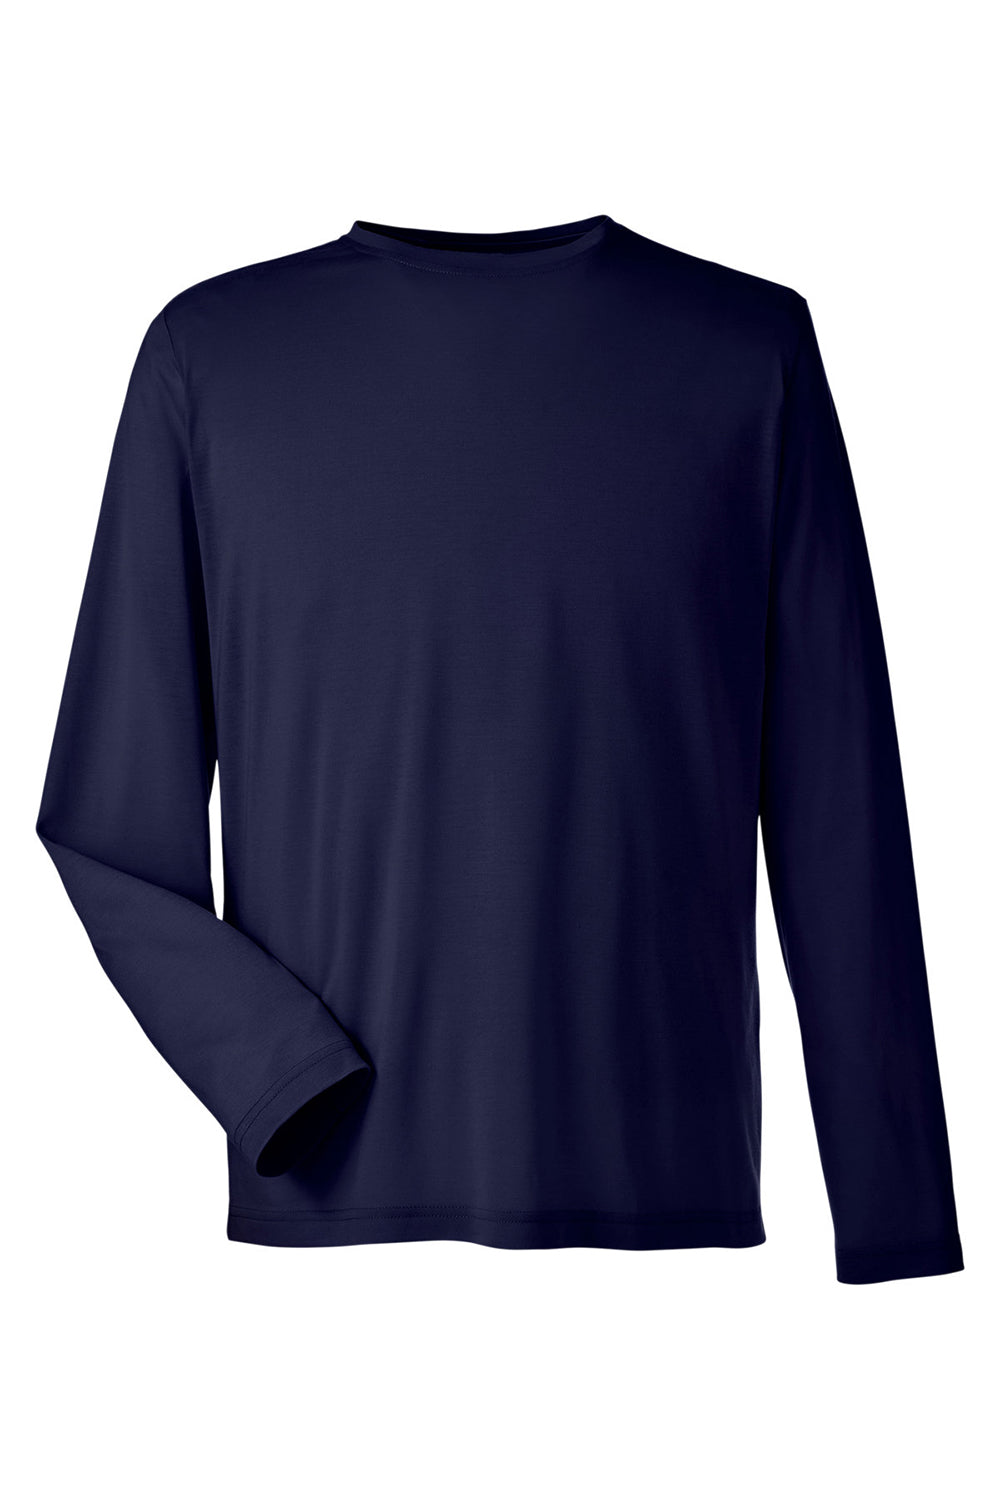 Core 365 CE111L Mens Fusion ChromaSoft Performance Moisture Wicking Long Sleeve Crewneck T-Shirt Classic Navy Blue Flat Front